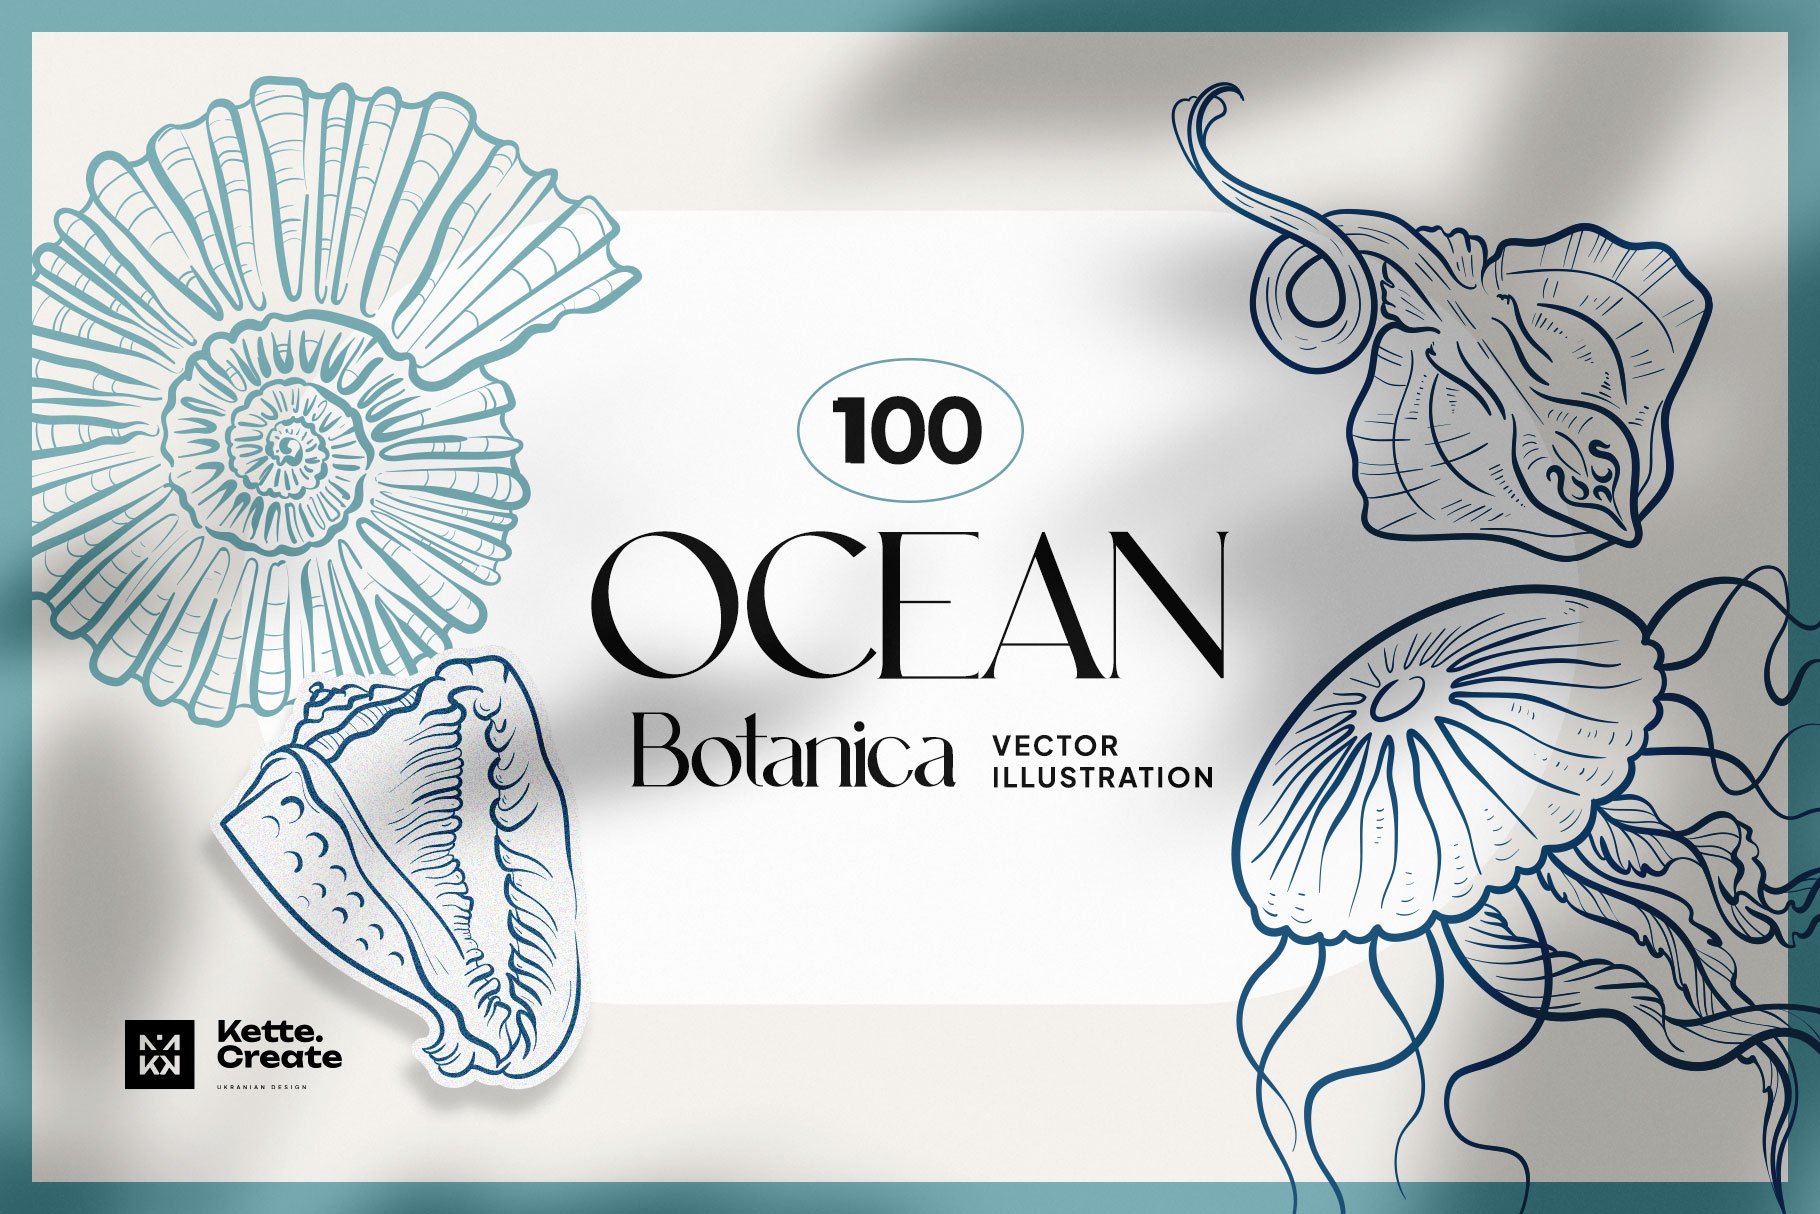 Ocean Botanica cover image.